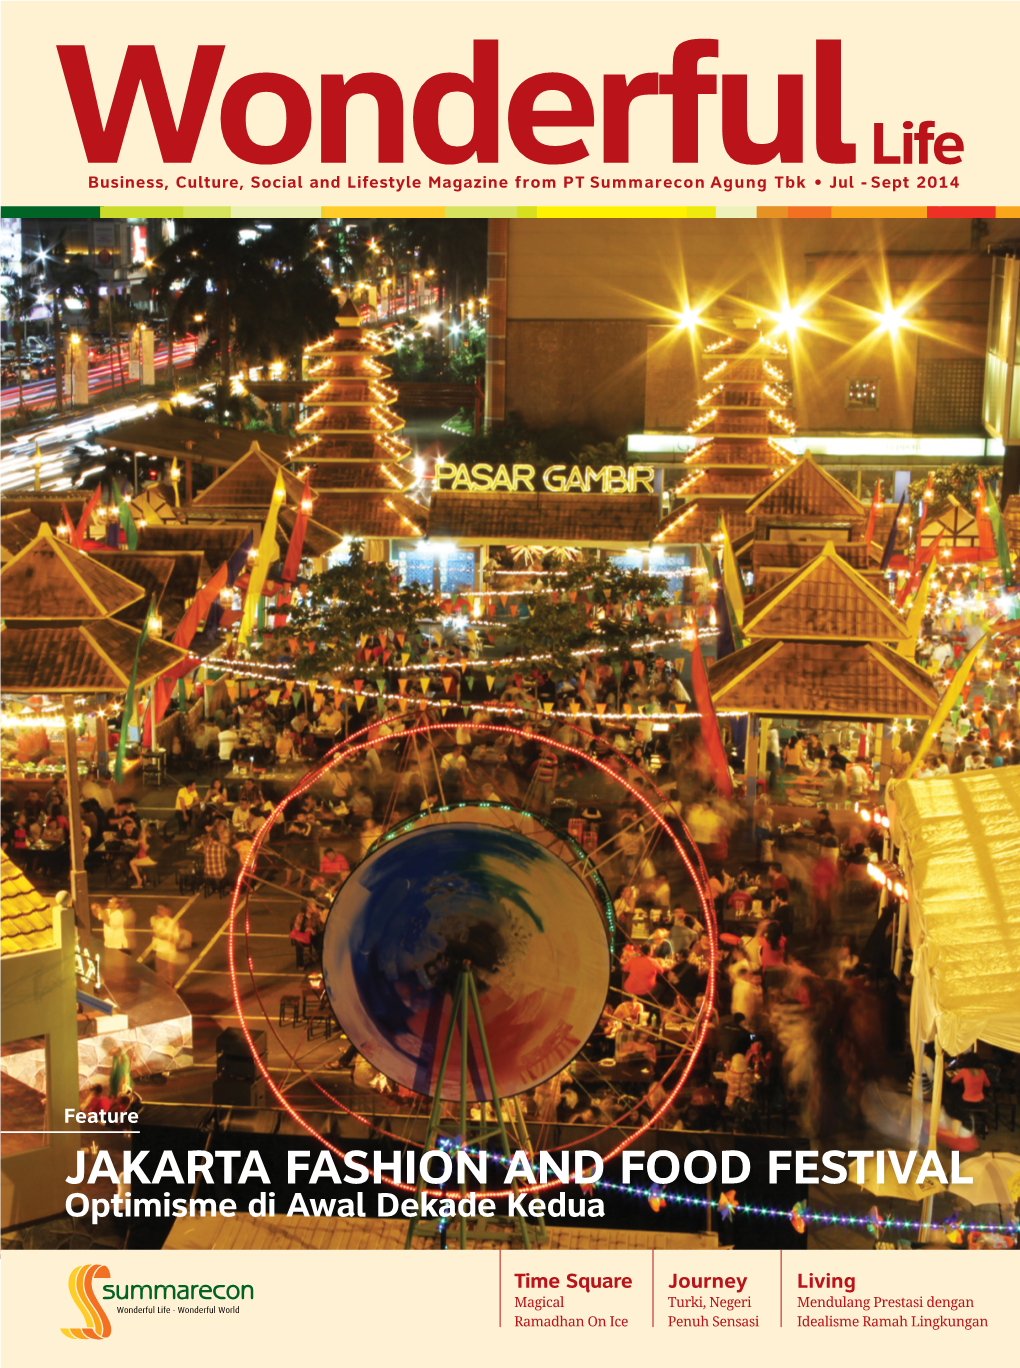 JAKARTA FASHION and FOOD FESTIVAL Optimisme Di Awal Dekade Kedua